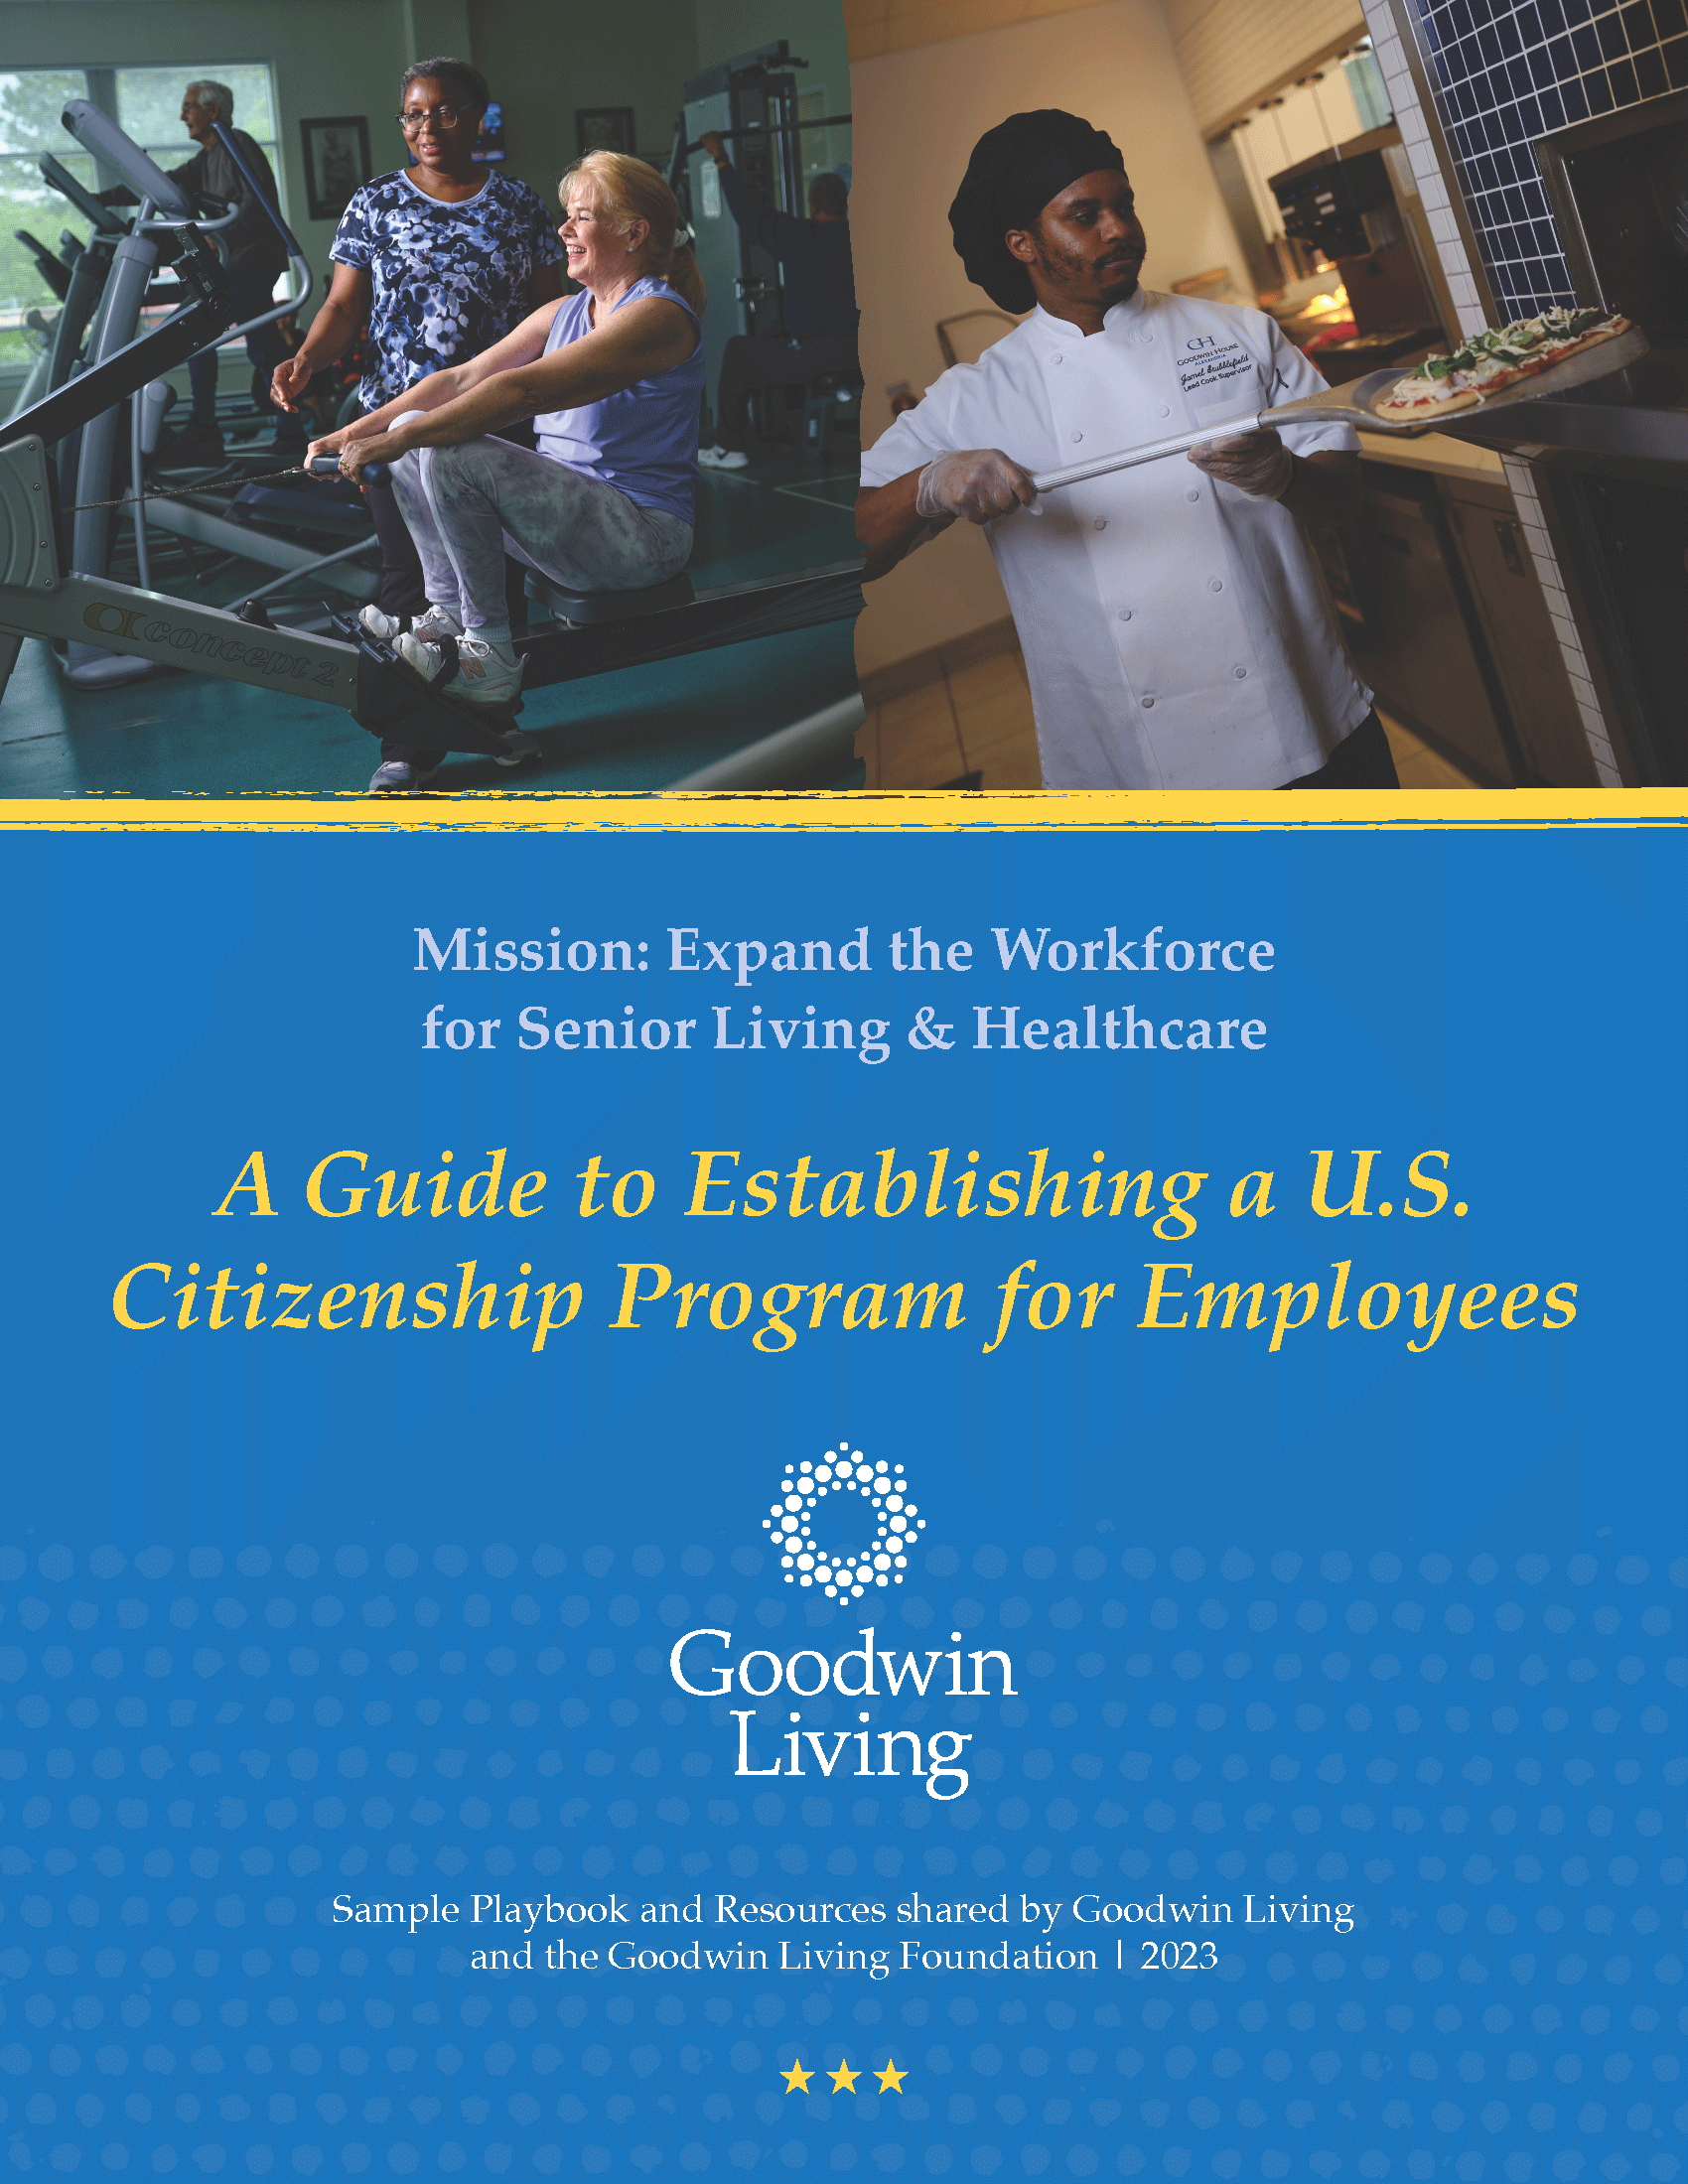 Playbook to start your U.S. citizenship program